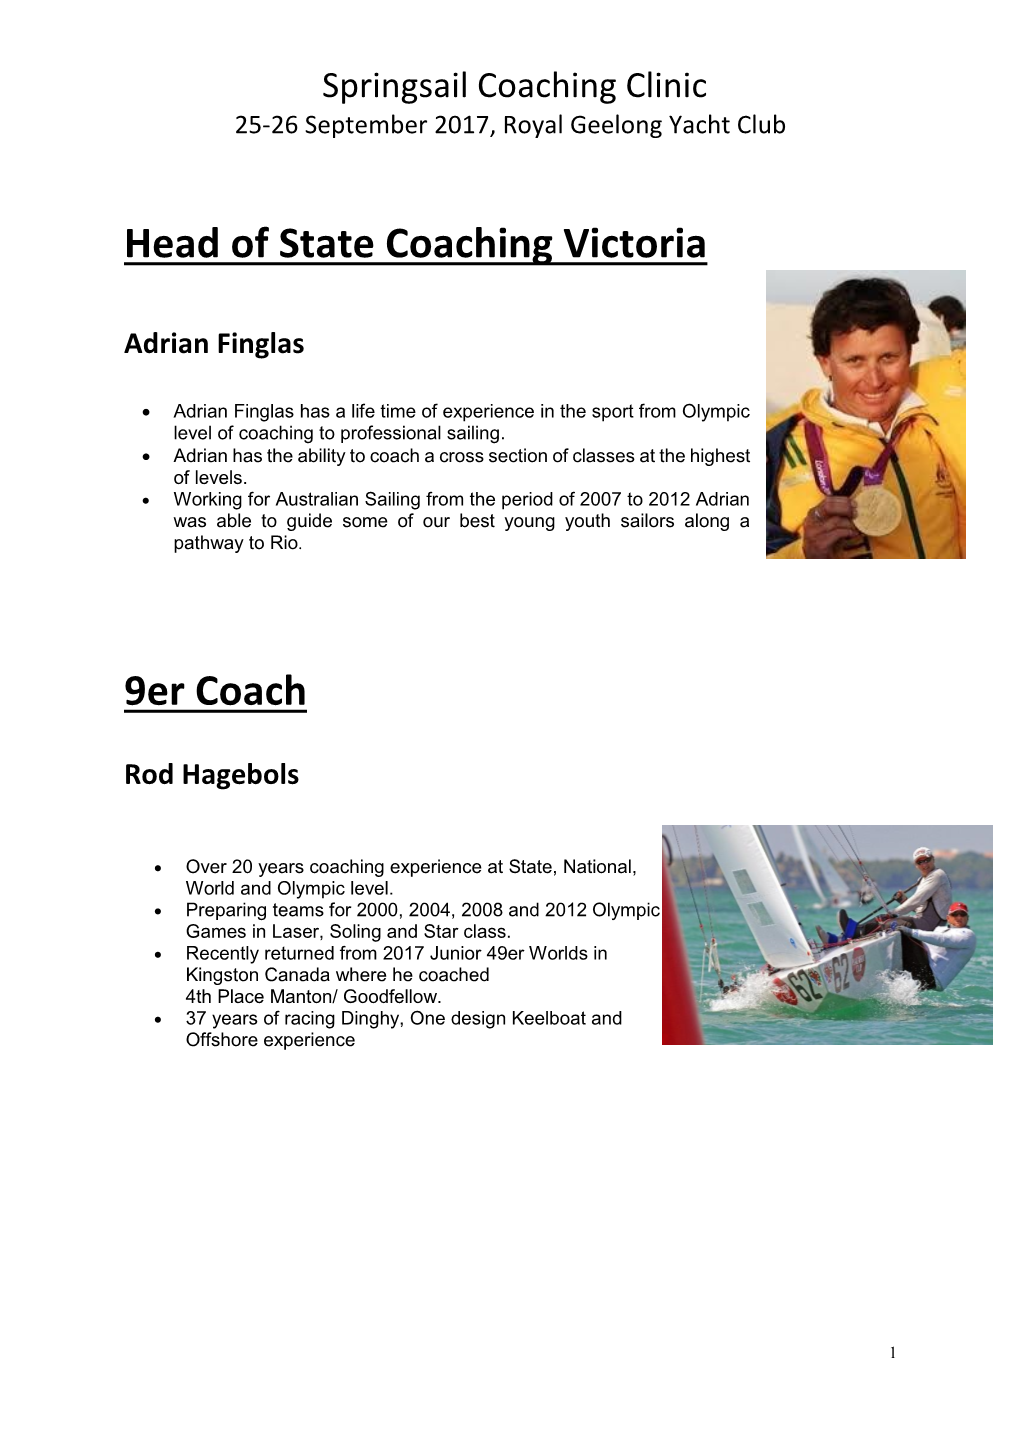 Springsail Coaching Clinic 25-26 September 2017, Royal Geelong Yacht Club